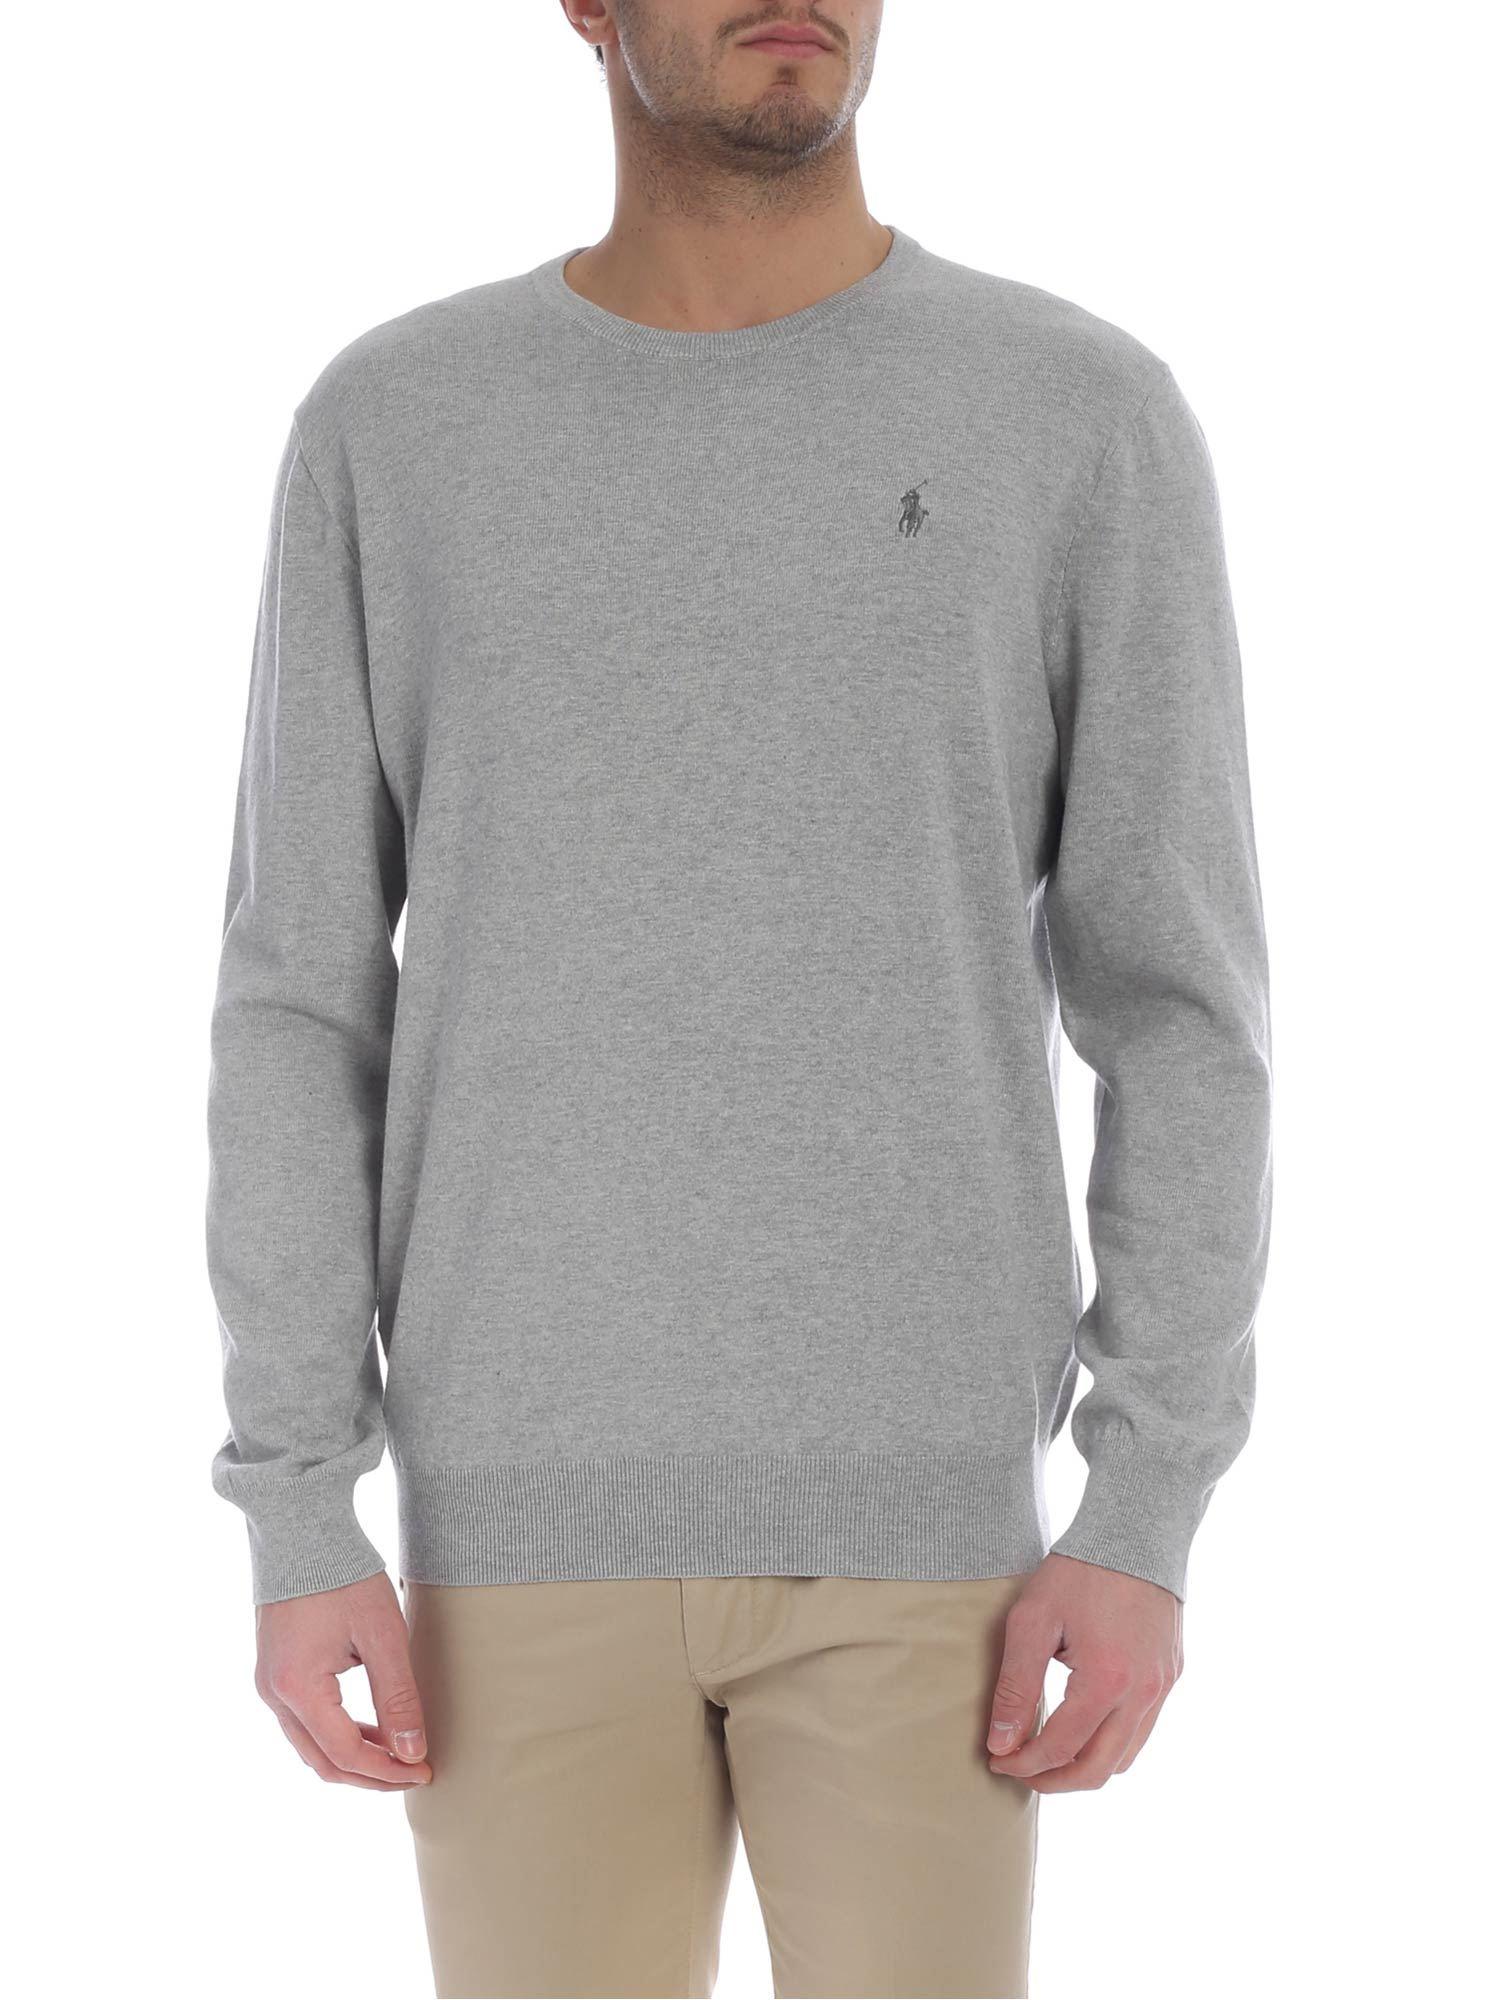 Lyst - Polo Ralph Lauren Grey Sweater in Gray for Men